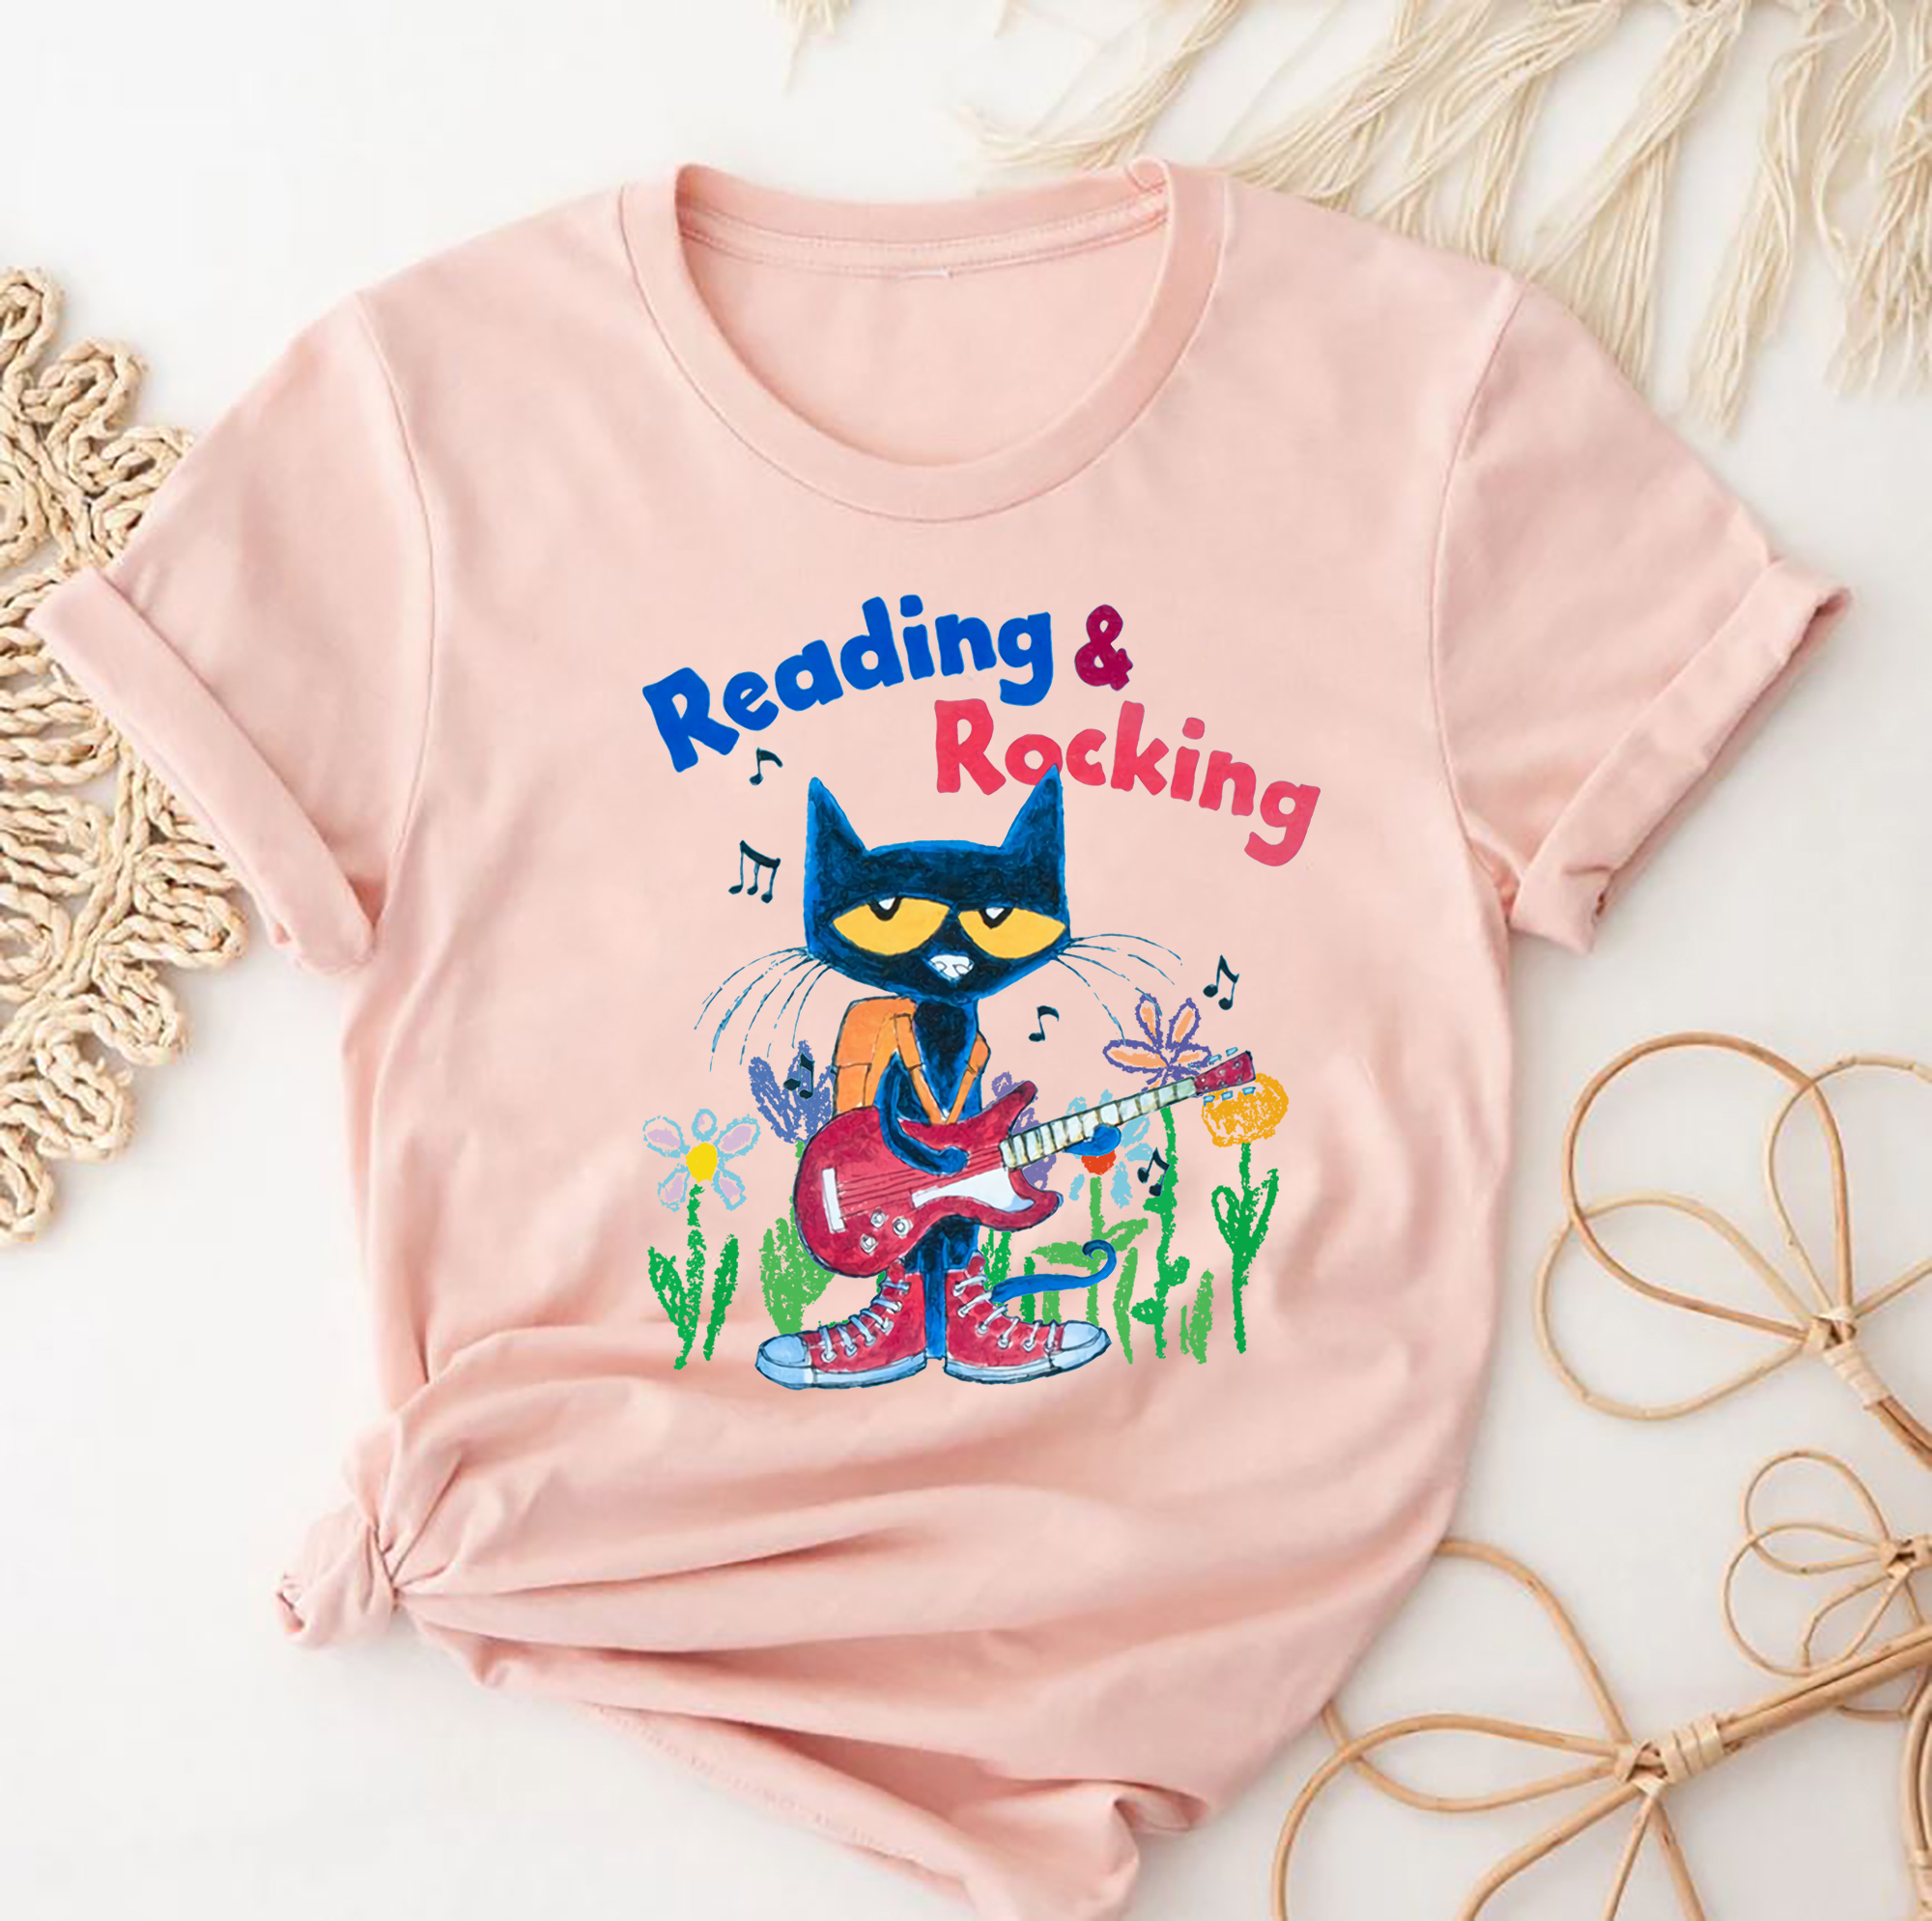 Pete The Cat Shirt, Pete The Cat Birthday Shirt, Reading Rocking Shirt, Groovy Shirt, Cat lovers shirt, Blue Cat Gift